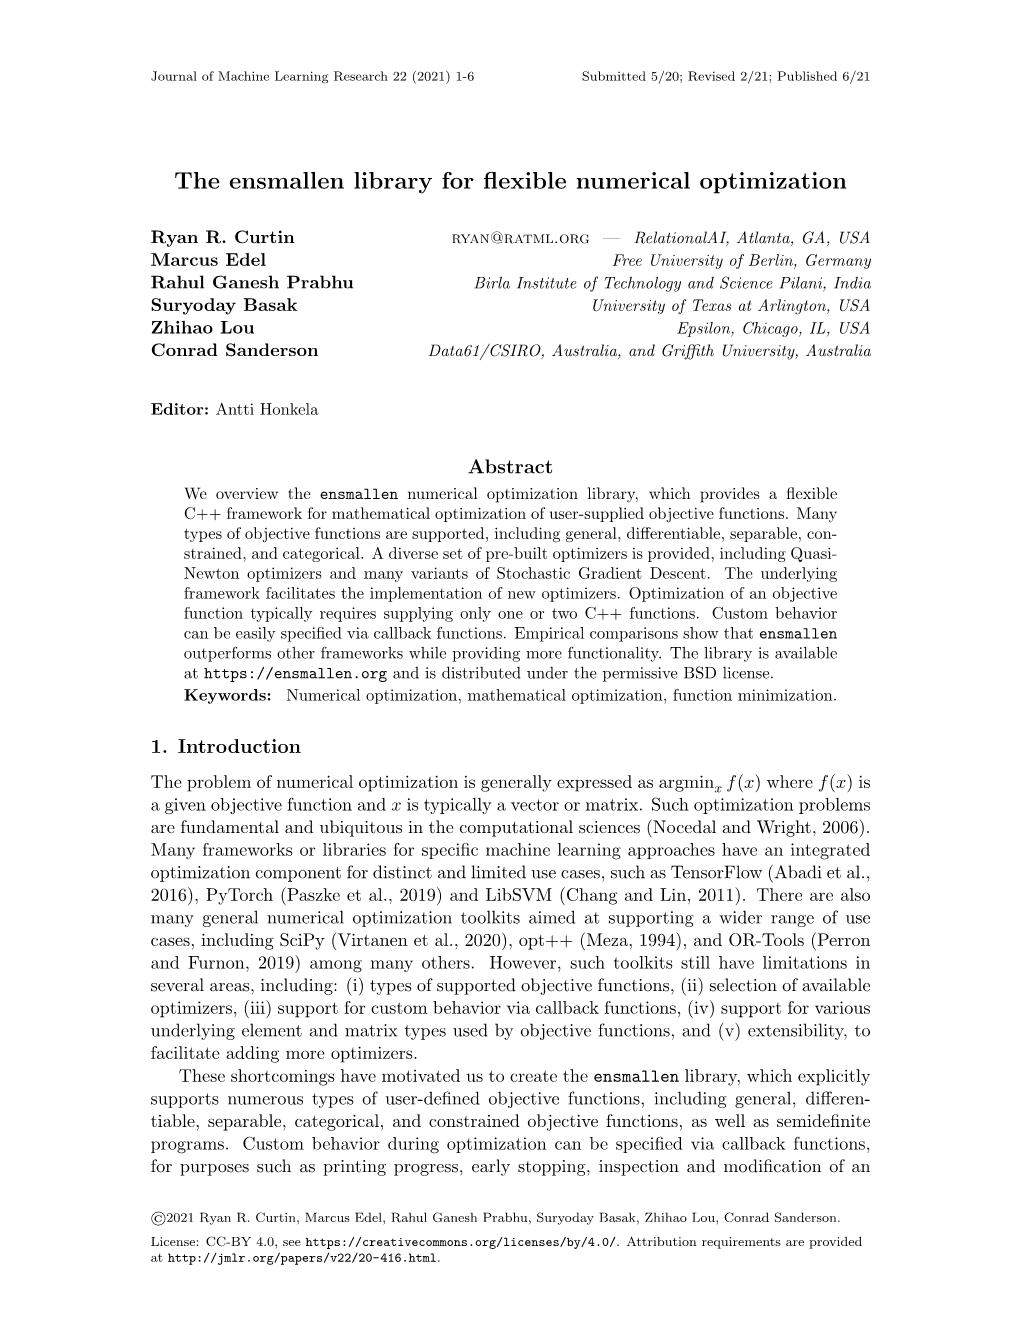 The Ensmallen Library for Flexible Numerical Optimization